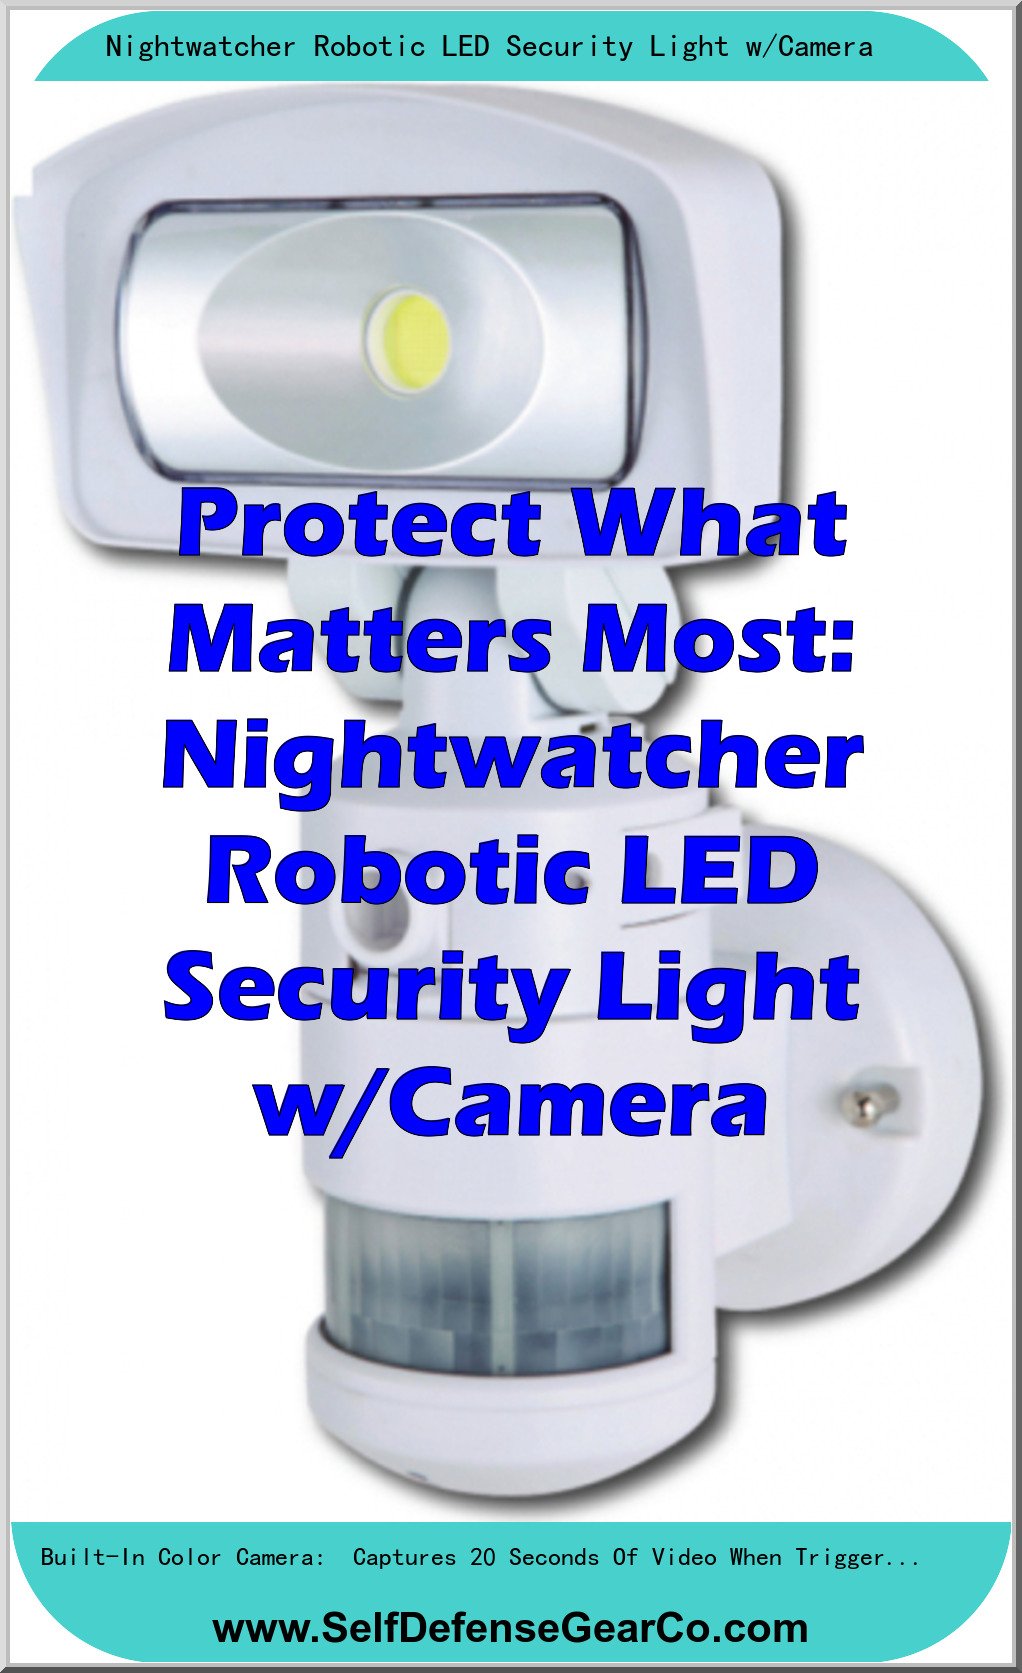 Nightwatcher Robotic LED Security Light w/Camera